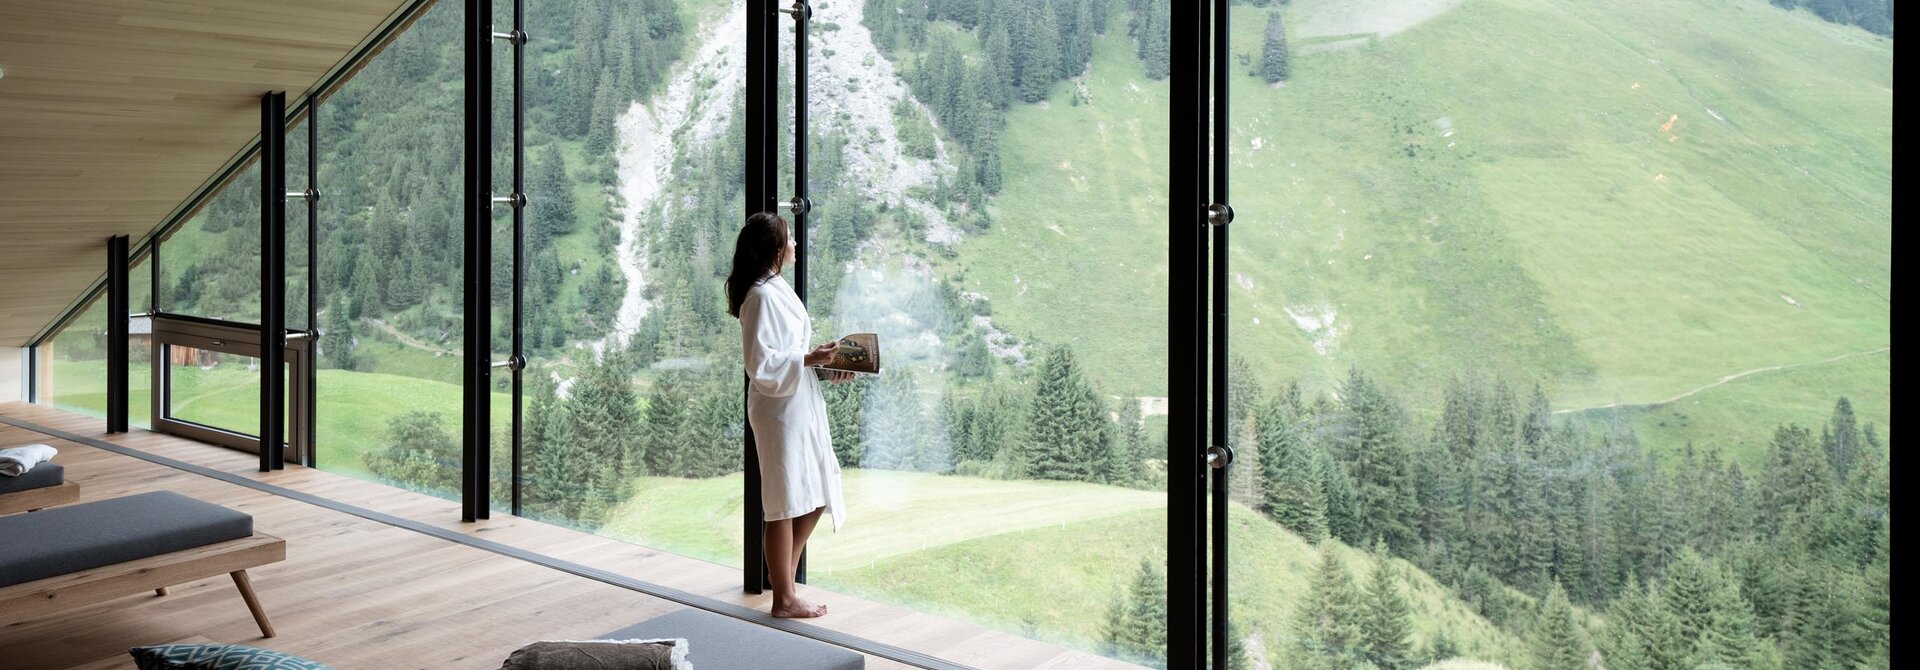 Ruheraum inmitten der Bergwelt | Wellnesshotel Arlberg